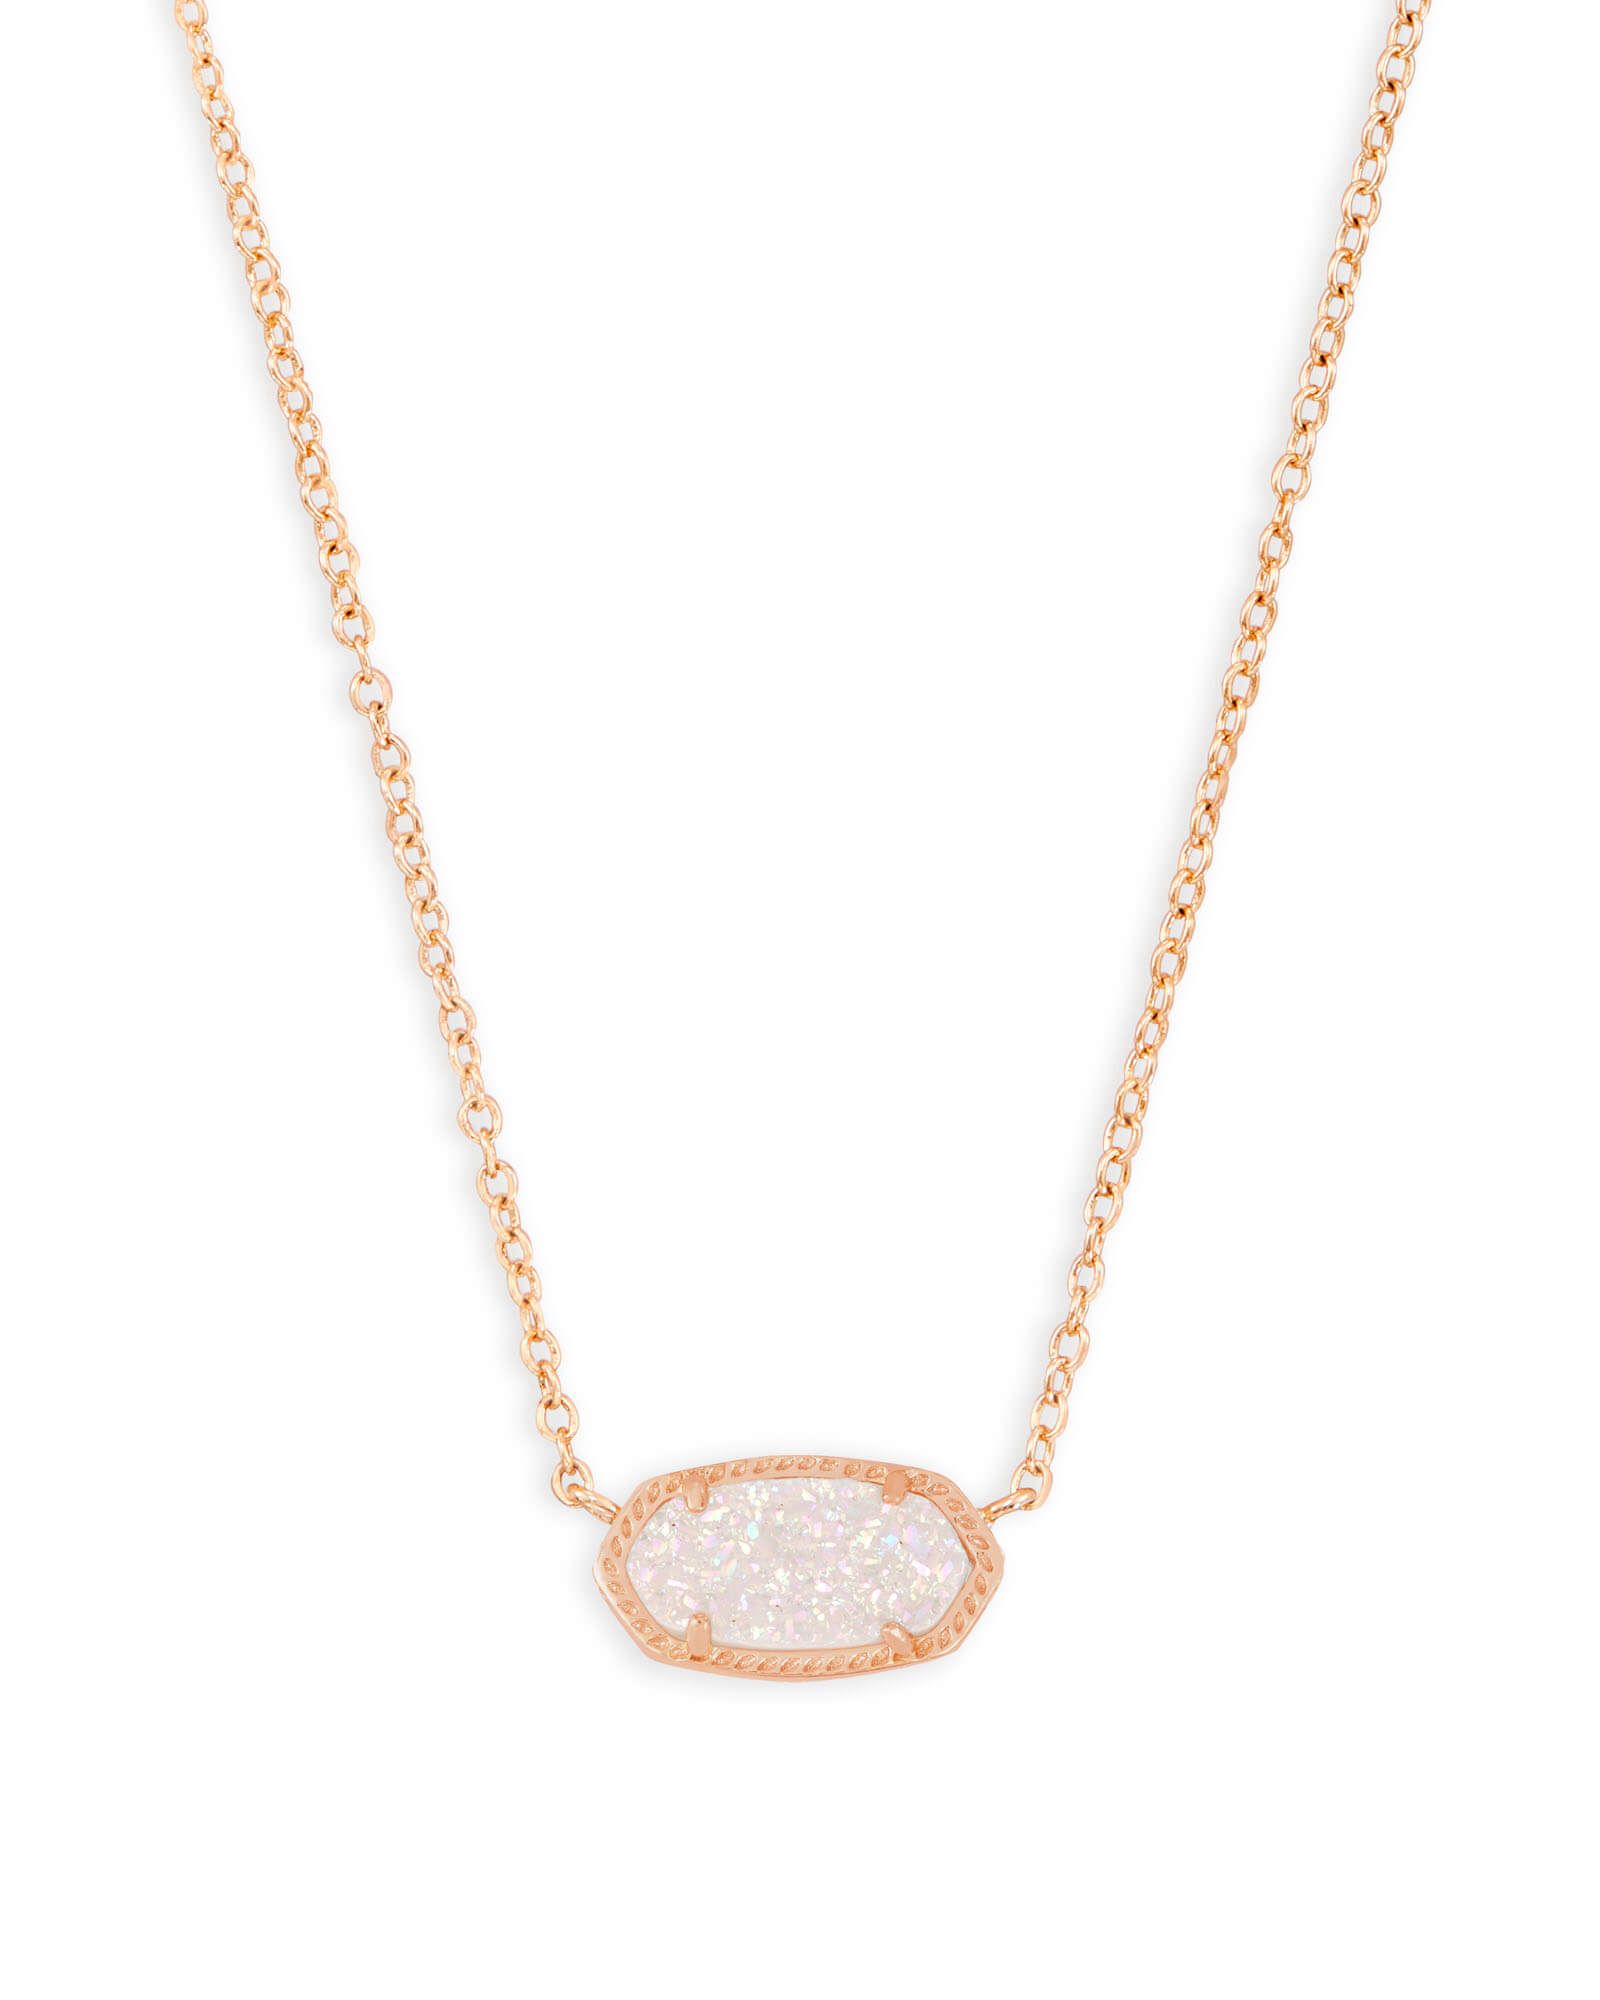 Elisa Rose Gold Pendant Necklace in Iridescent Drusy | Kendra Scott